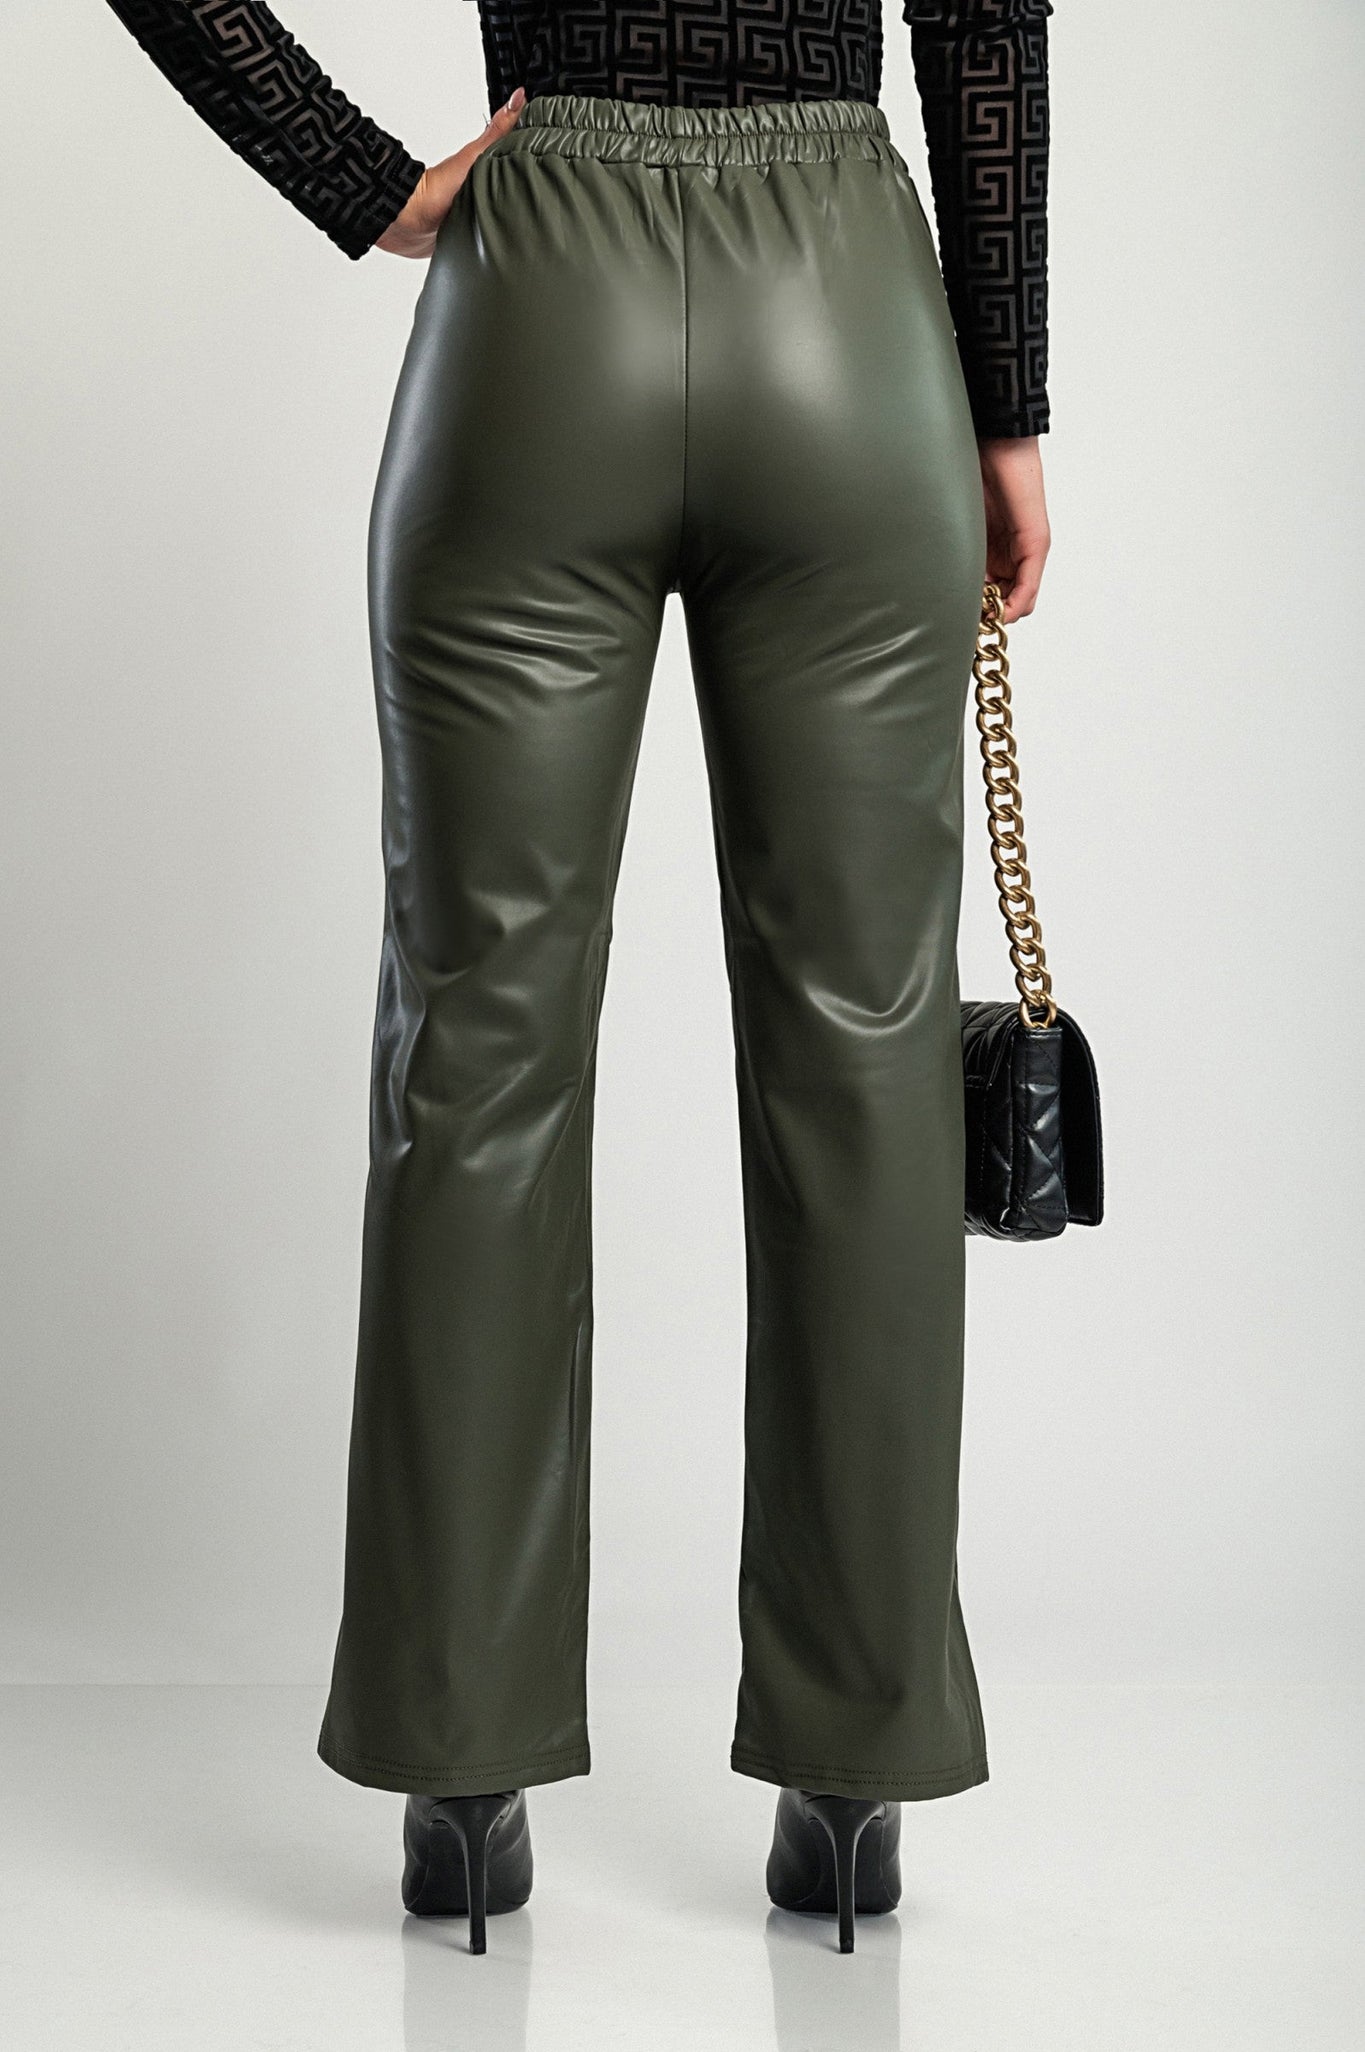 Pants made of imitation leather, olive